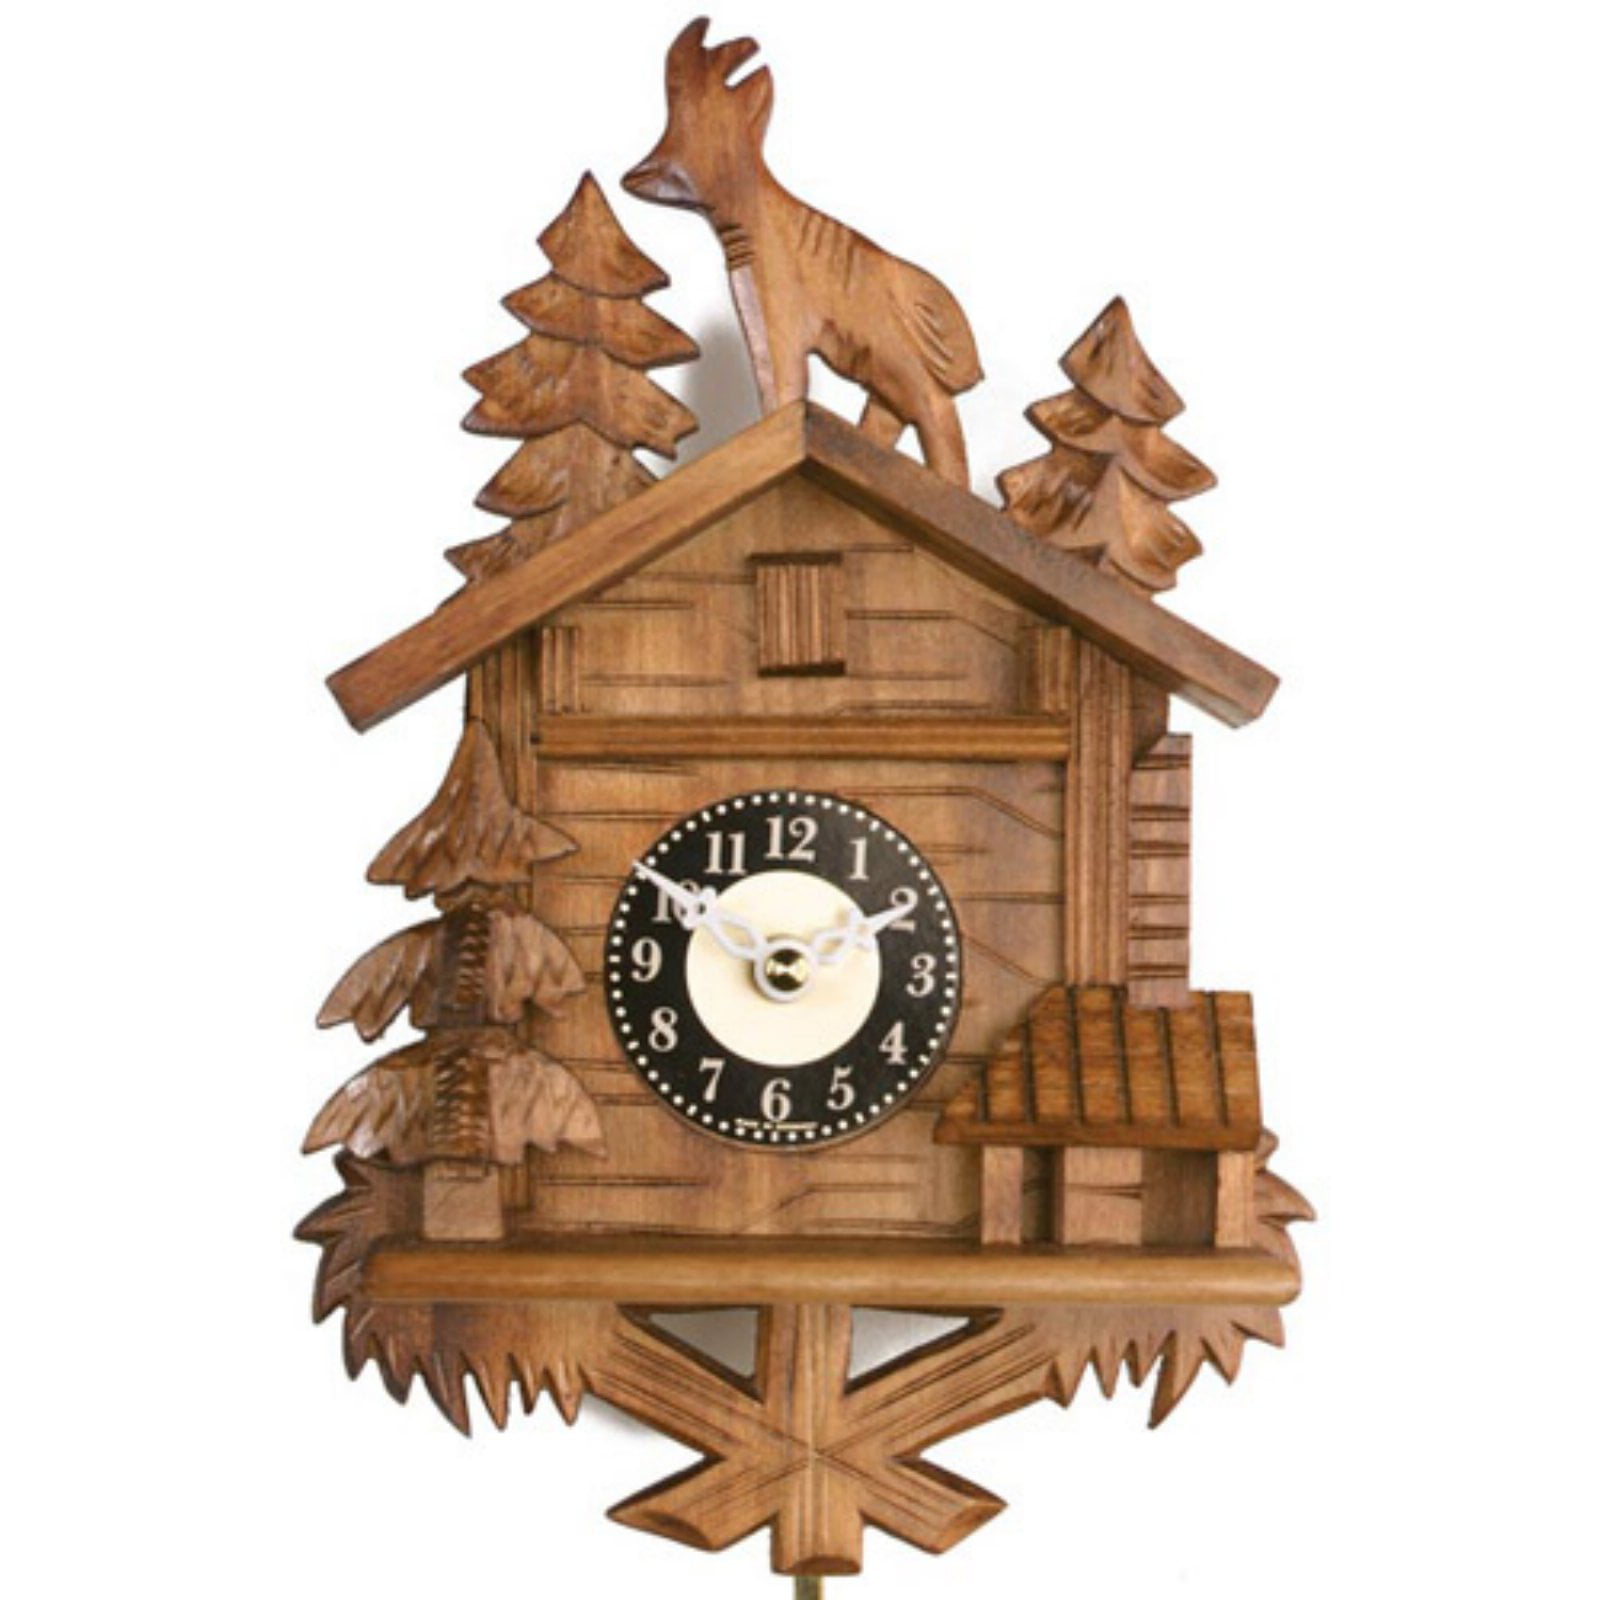 River City Clocks Quartz Novelty Clock - German Chalet with Bird